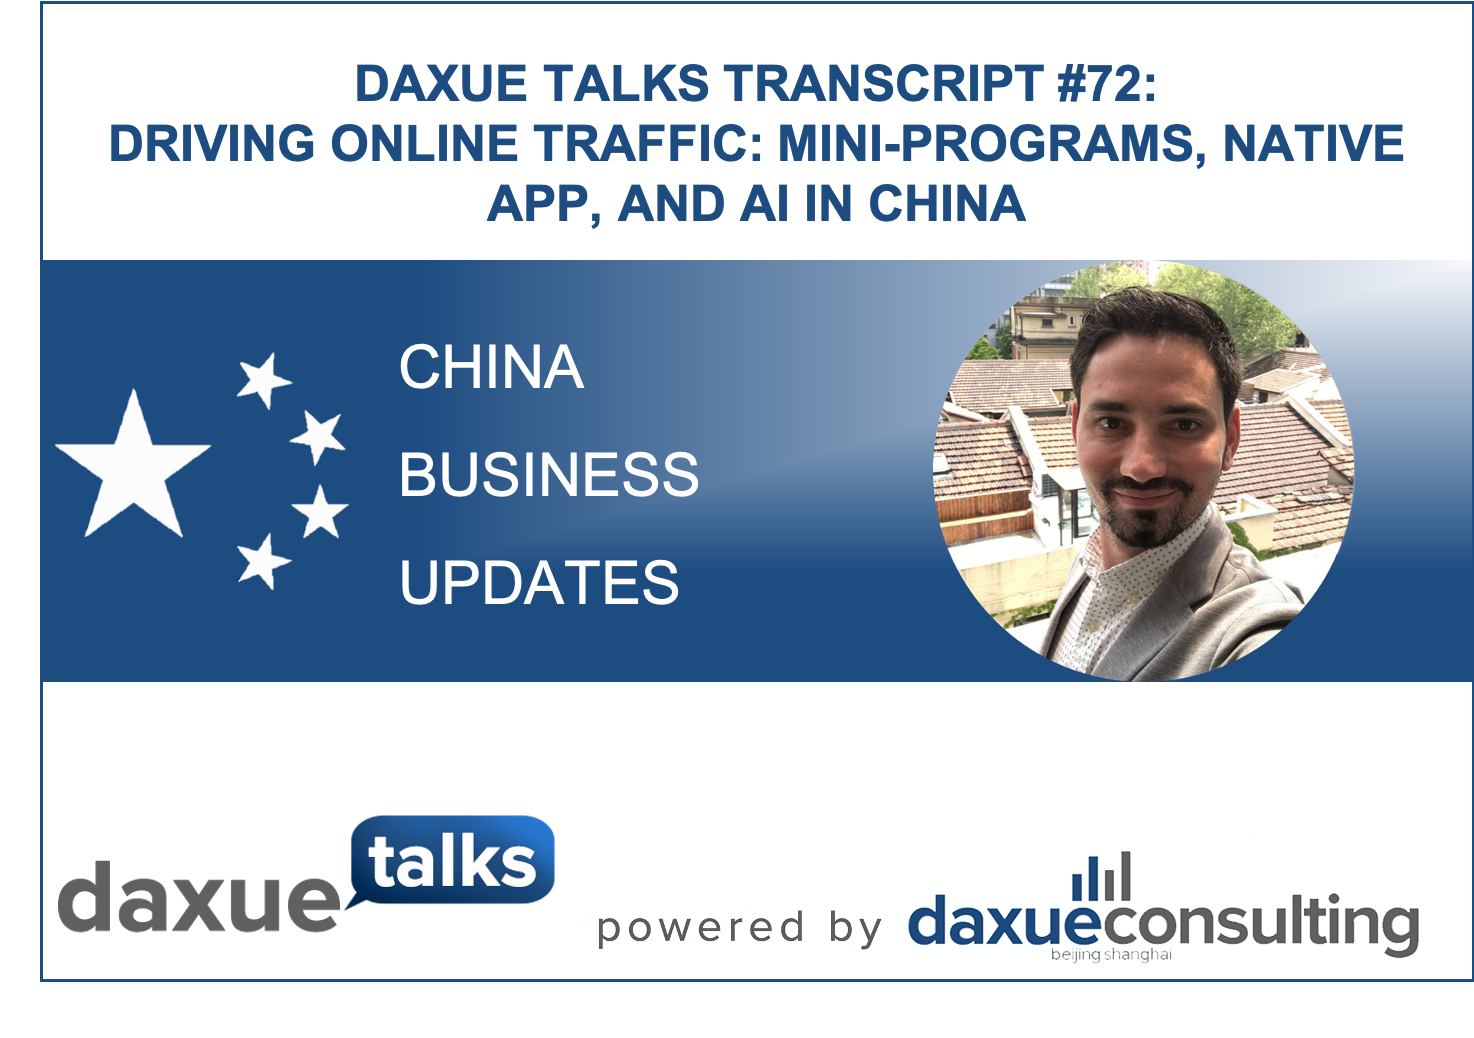 Daxue Talks transcript #72: Driving online traffic: Mini-programs, native app, and AI in China